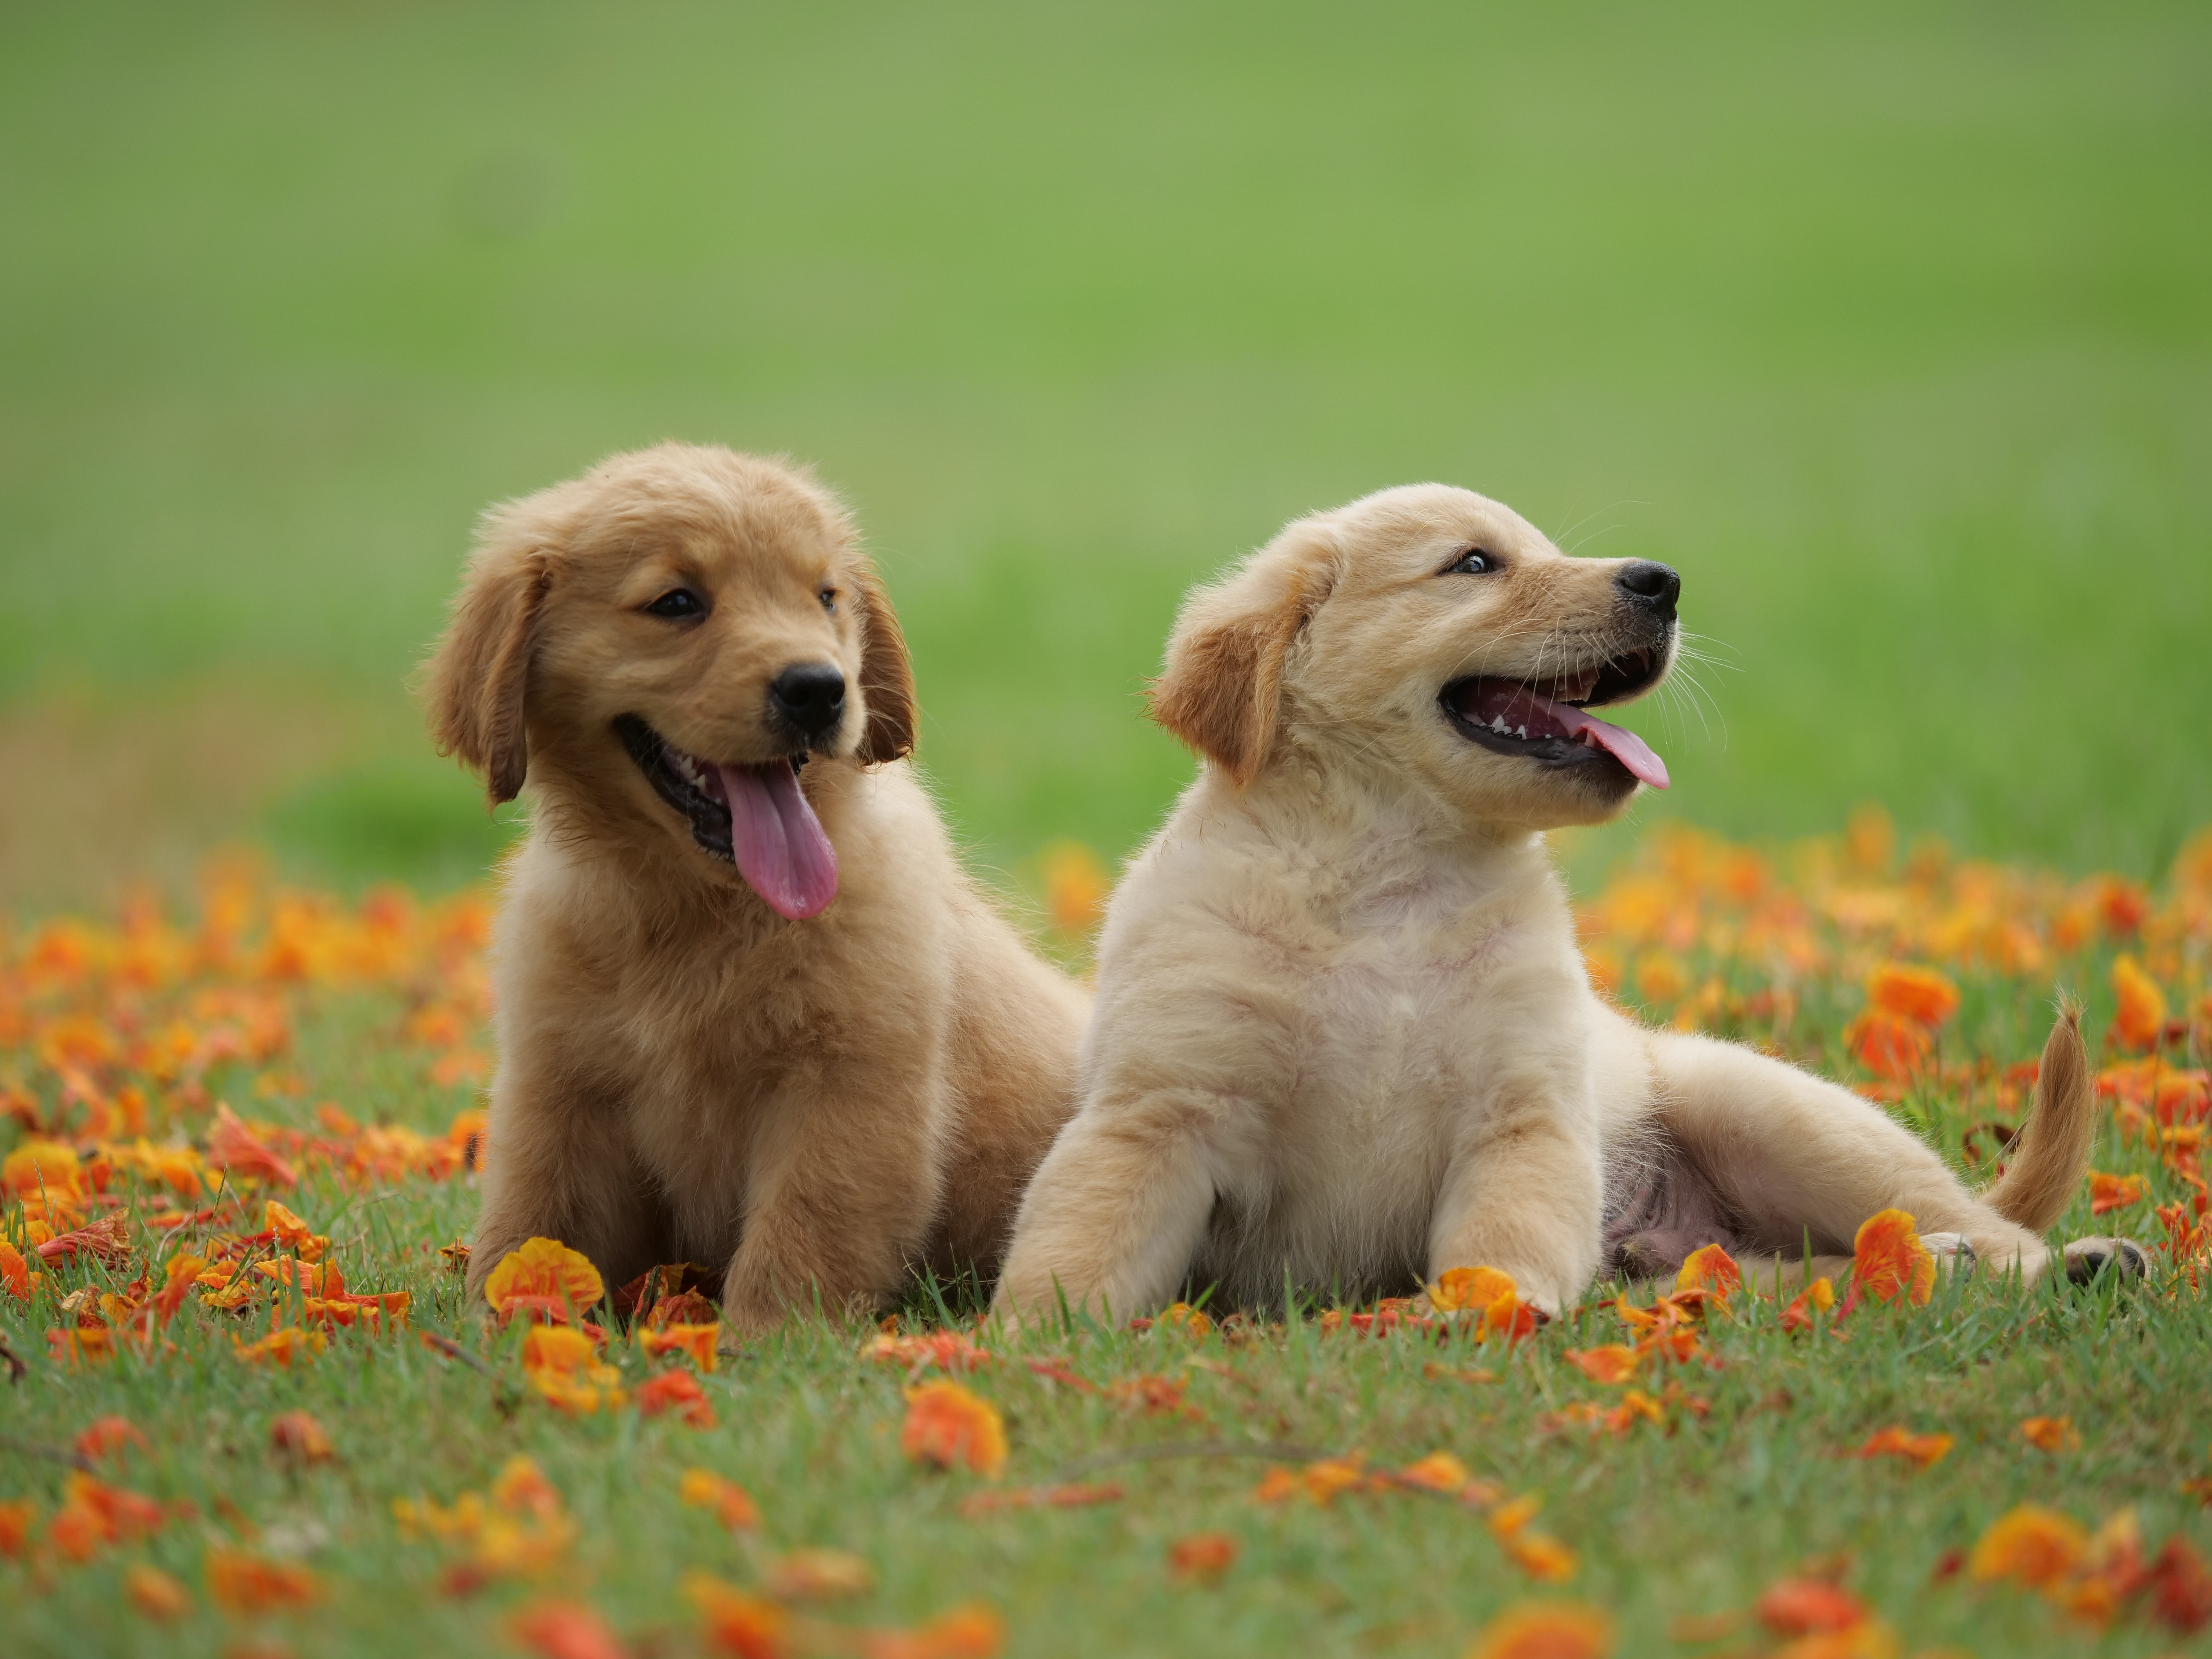 Baby Animal Dog Golden Retriever Pet Puppy 5184x3888